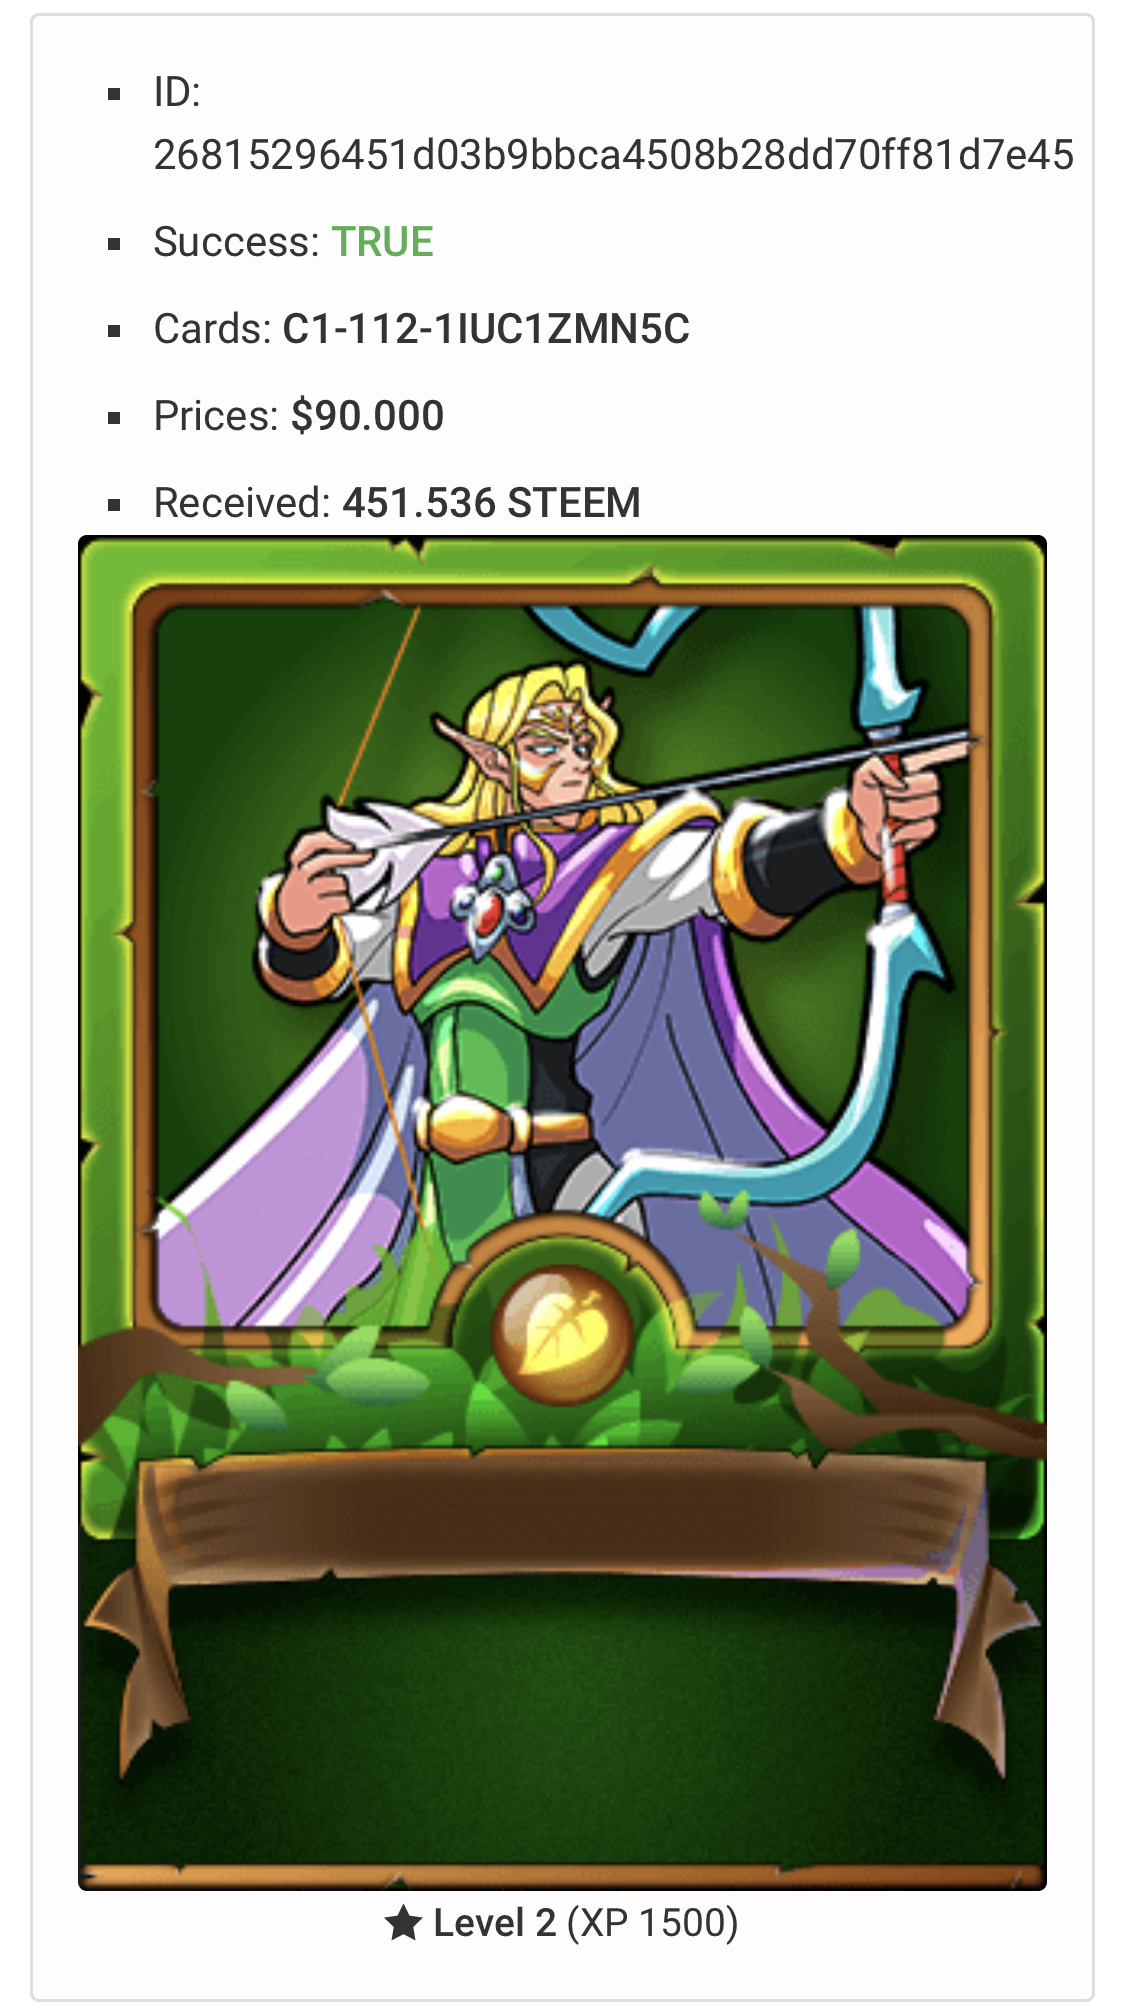 [Steem Monsters] Prince Rennyn was sold